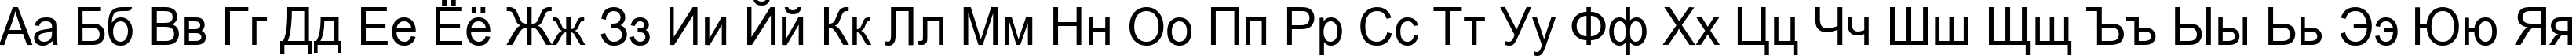 Пример написания русского алфавита шрифтом Arial Cyr95n